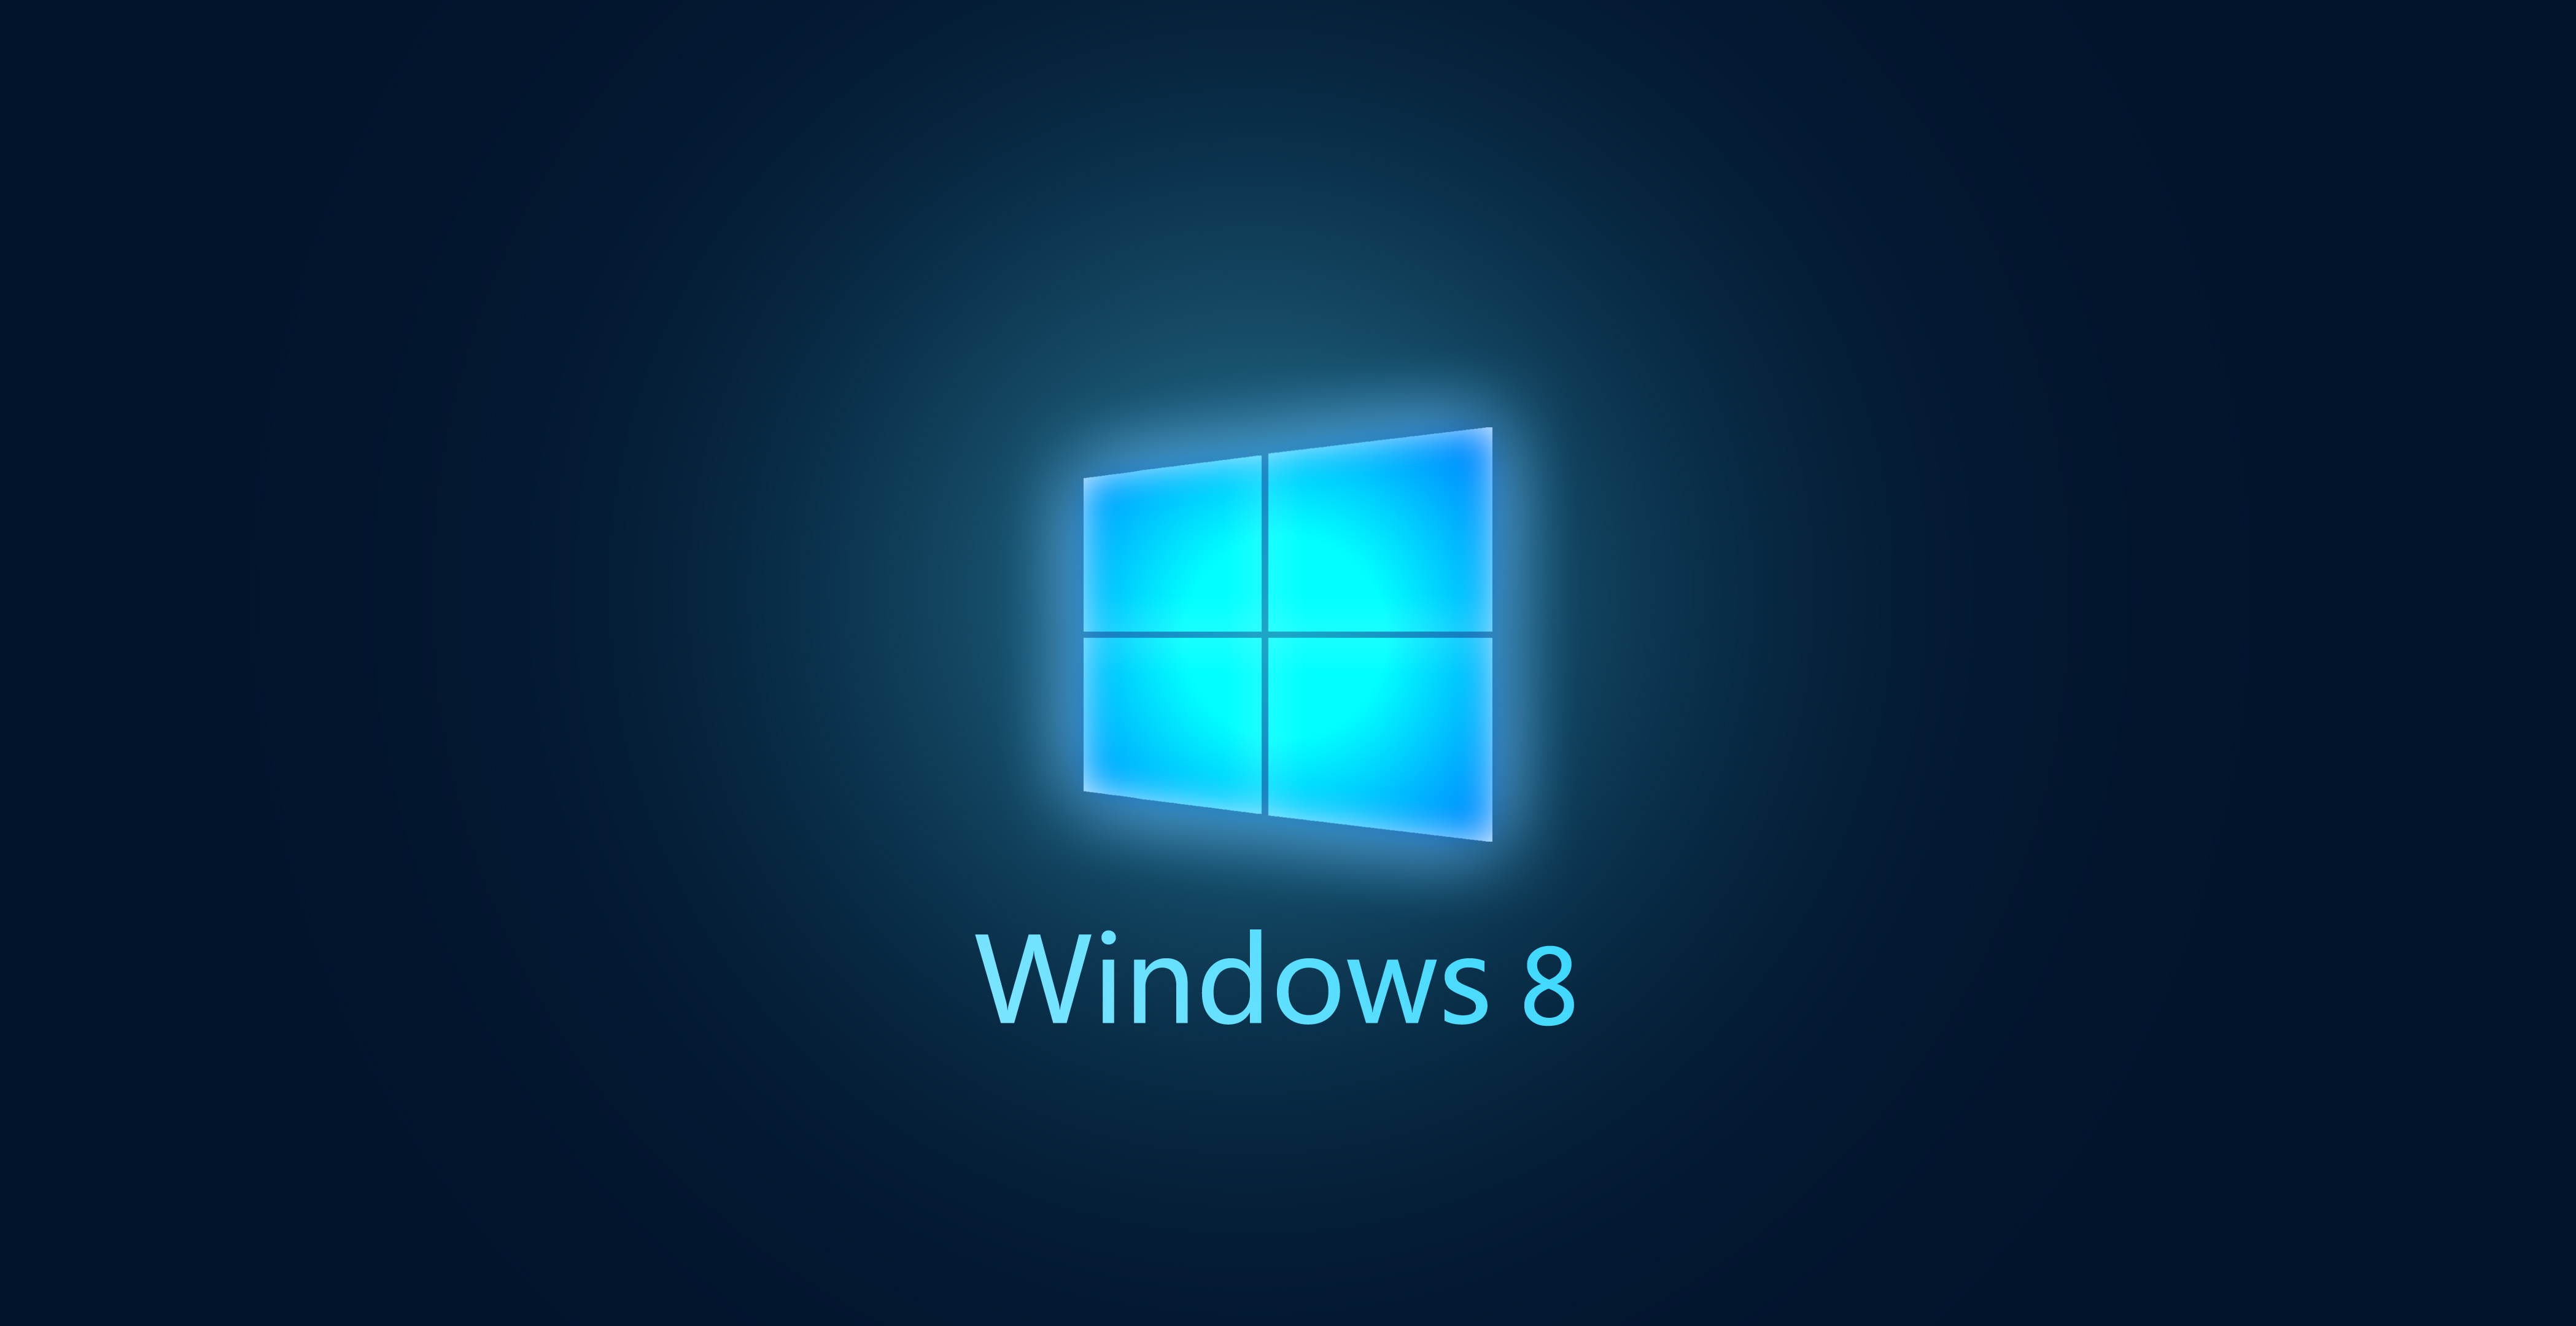 General 4196x2160 windows logo Microsoft operating system technology brand logo